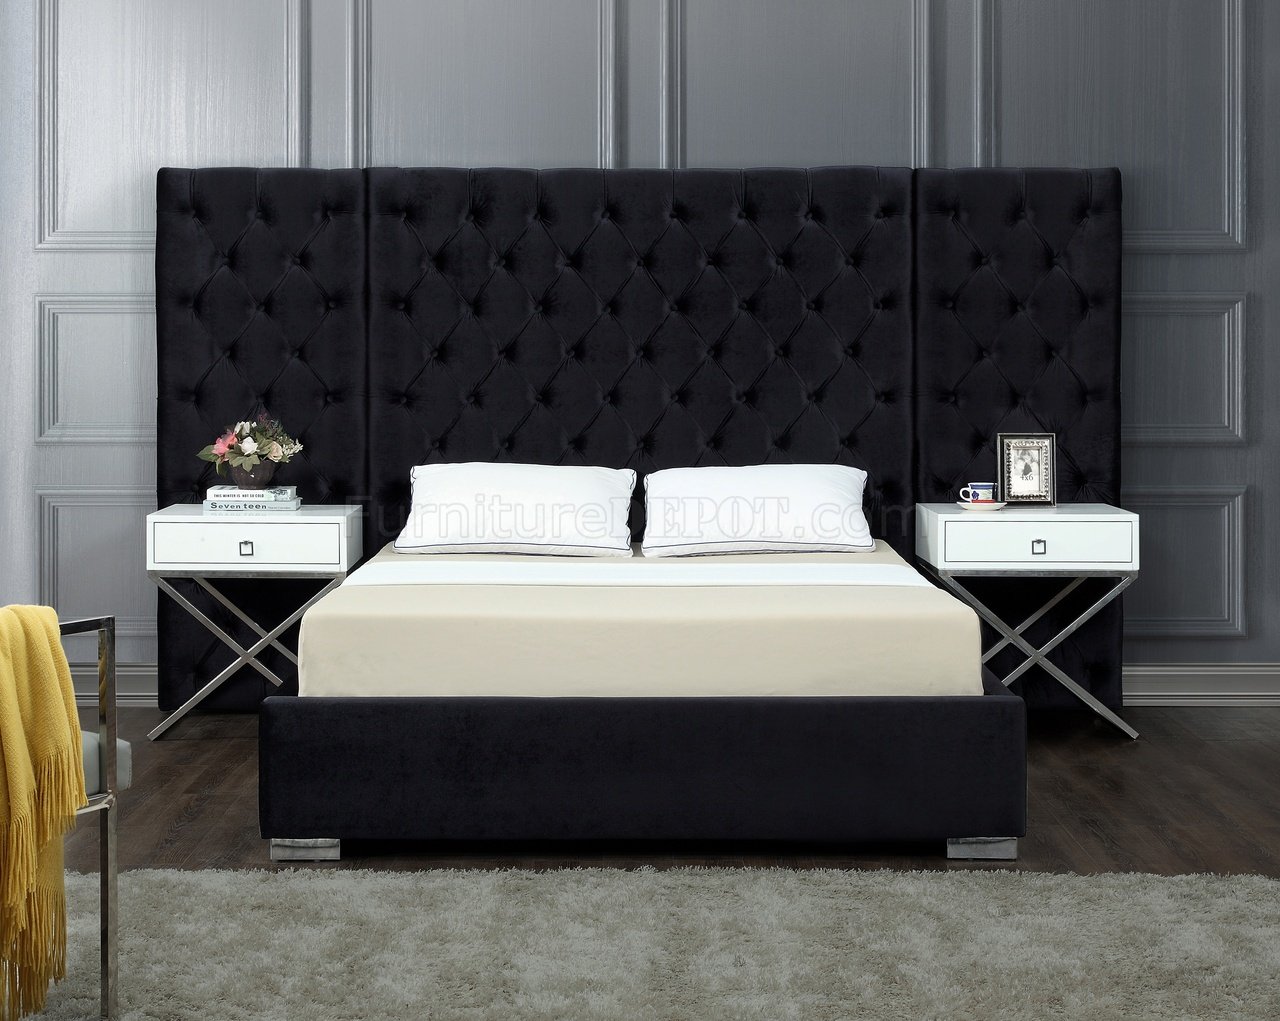 Contemporary Bedroom Sets Queen bedroom inspire